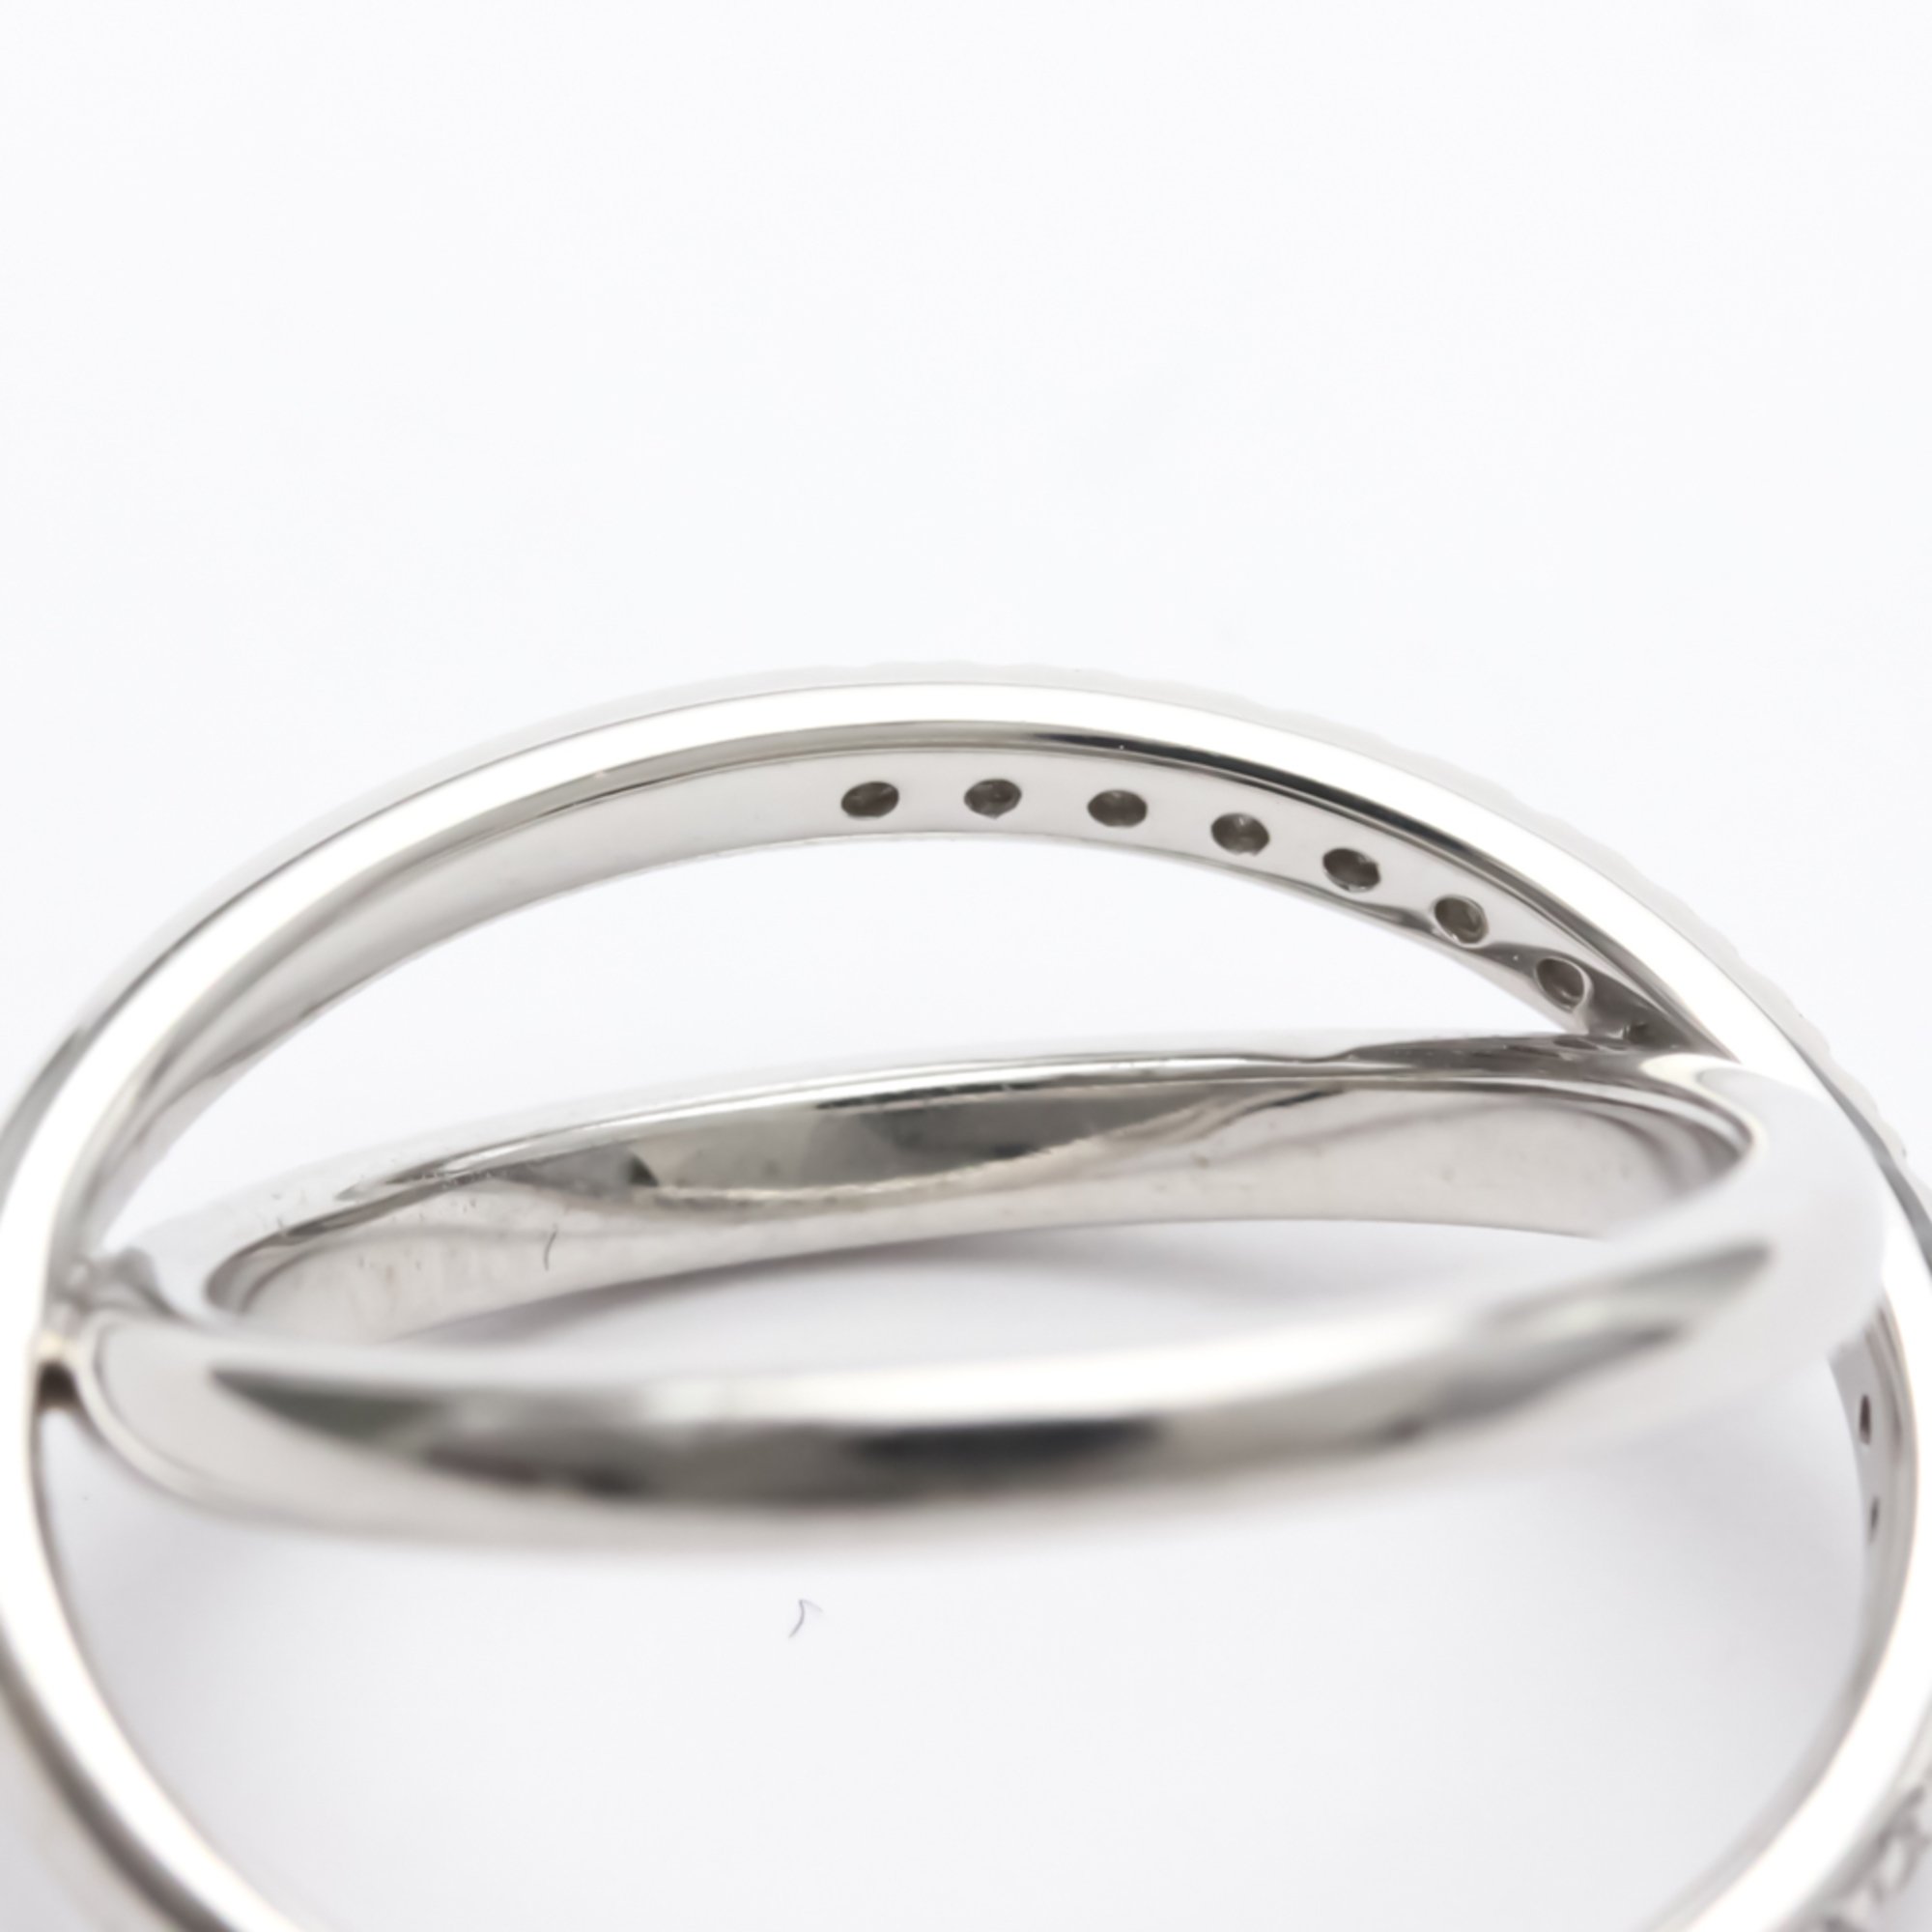 Mikimoto Diamond Ring White Gold (18K) Fashion Diamond Band Ring Carat/0.18 Silver